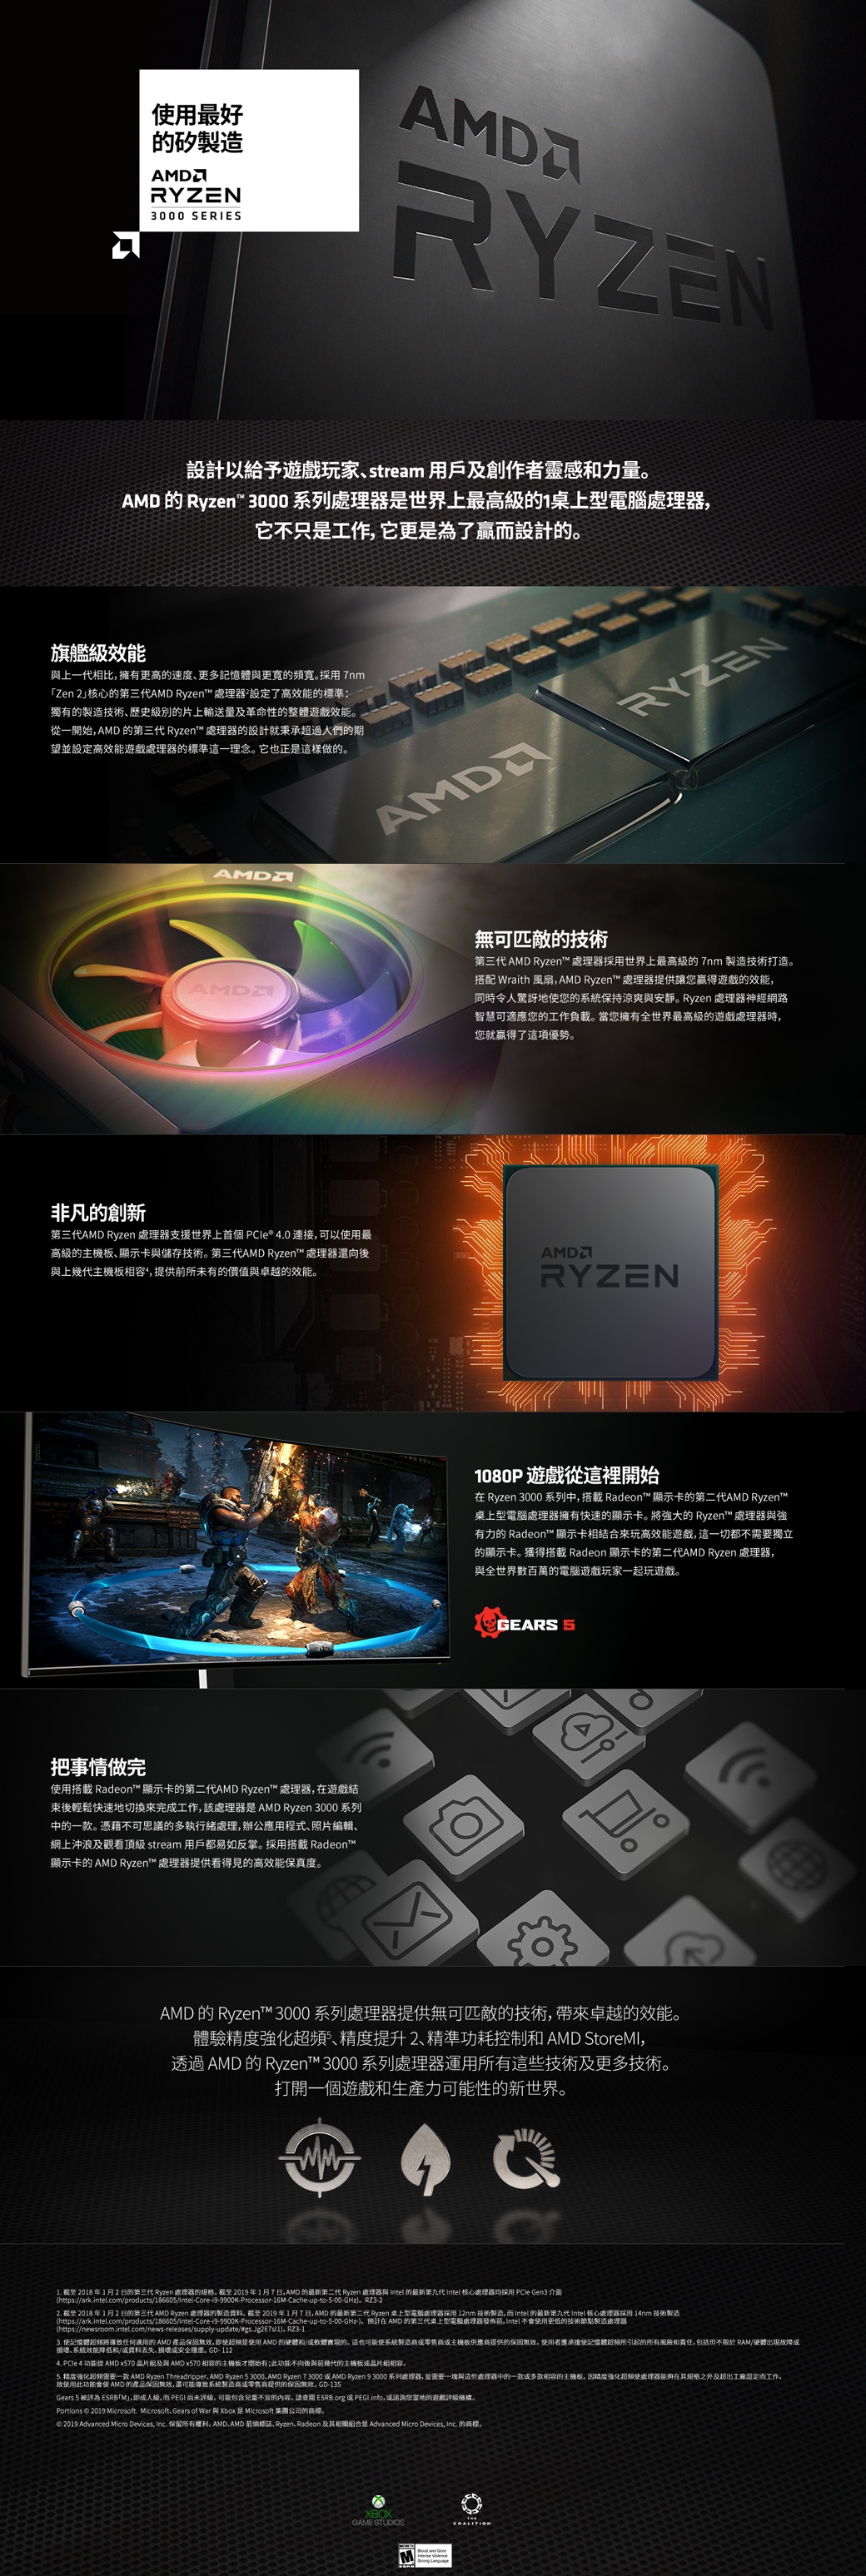 AMD Ryzen5 3400G + MSI X570 組合套餐